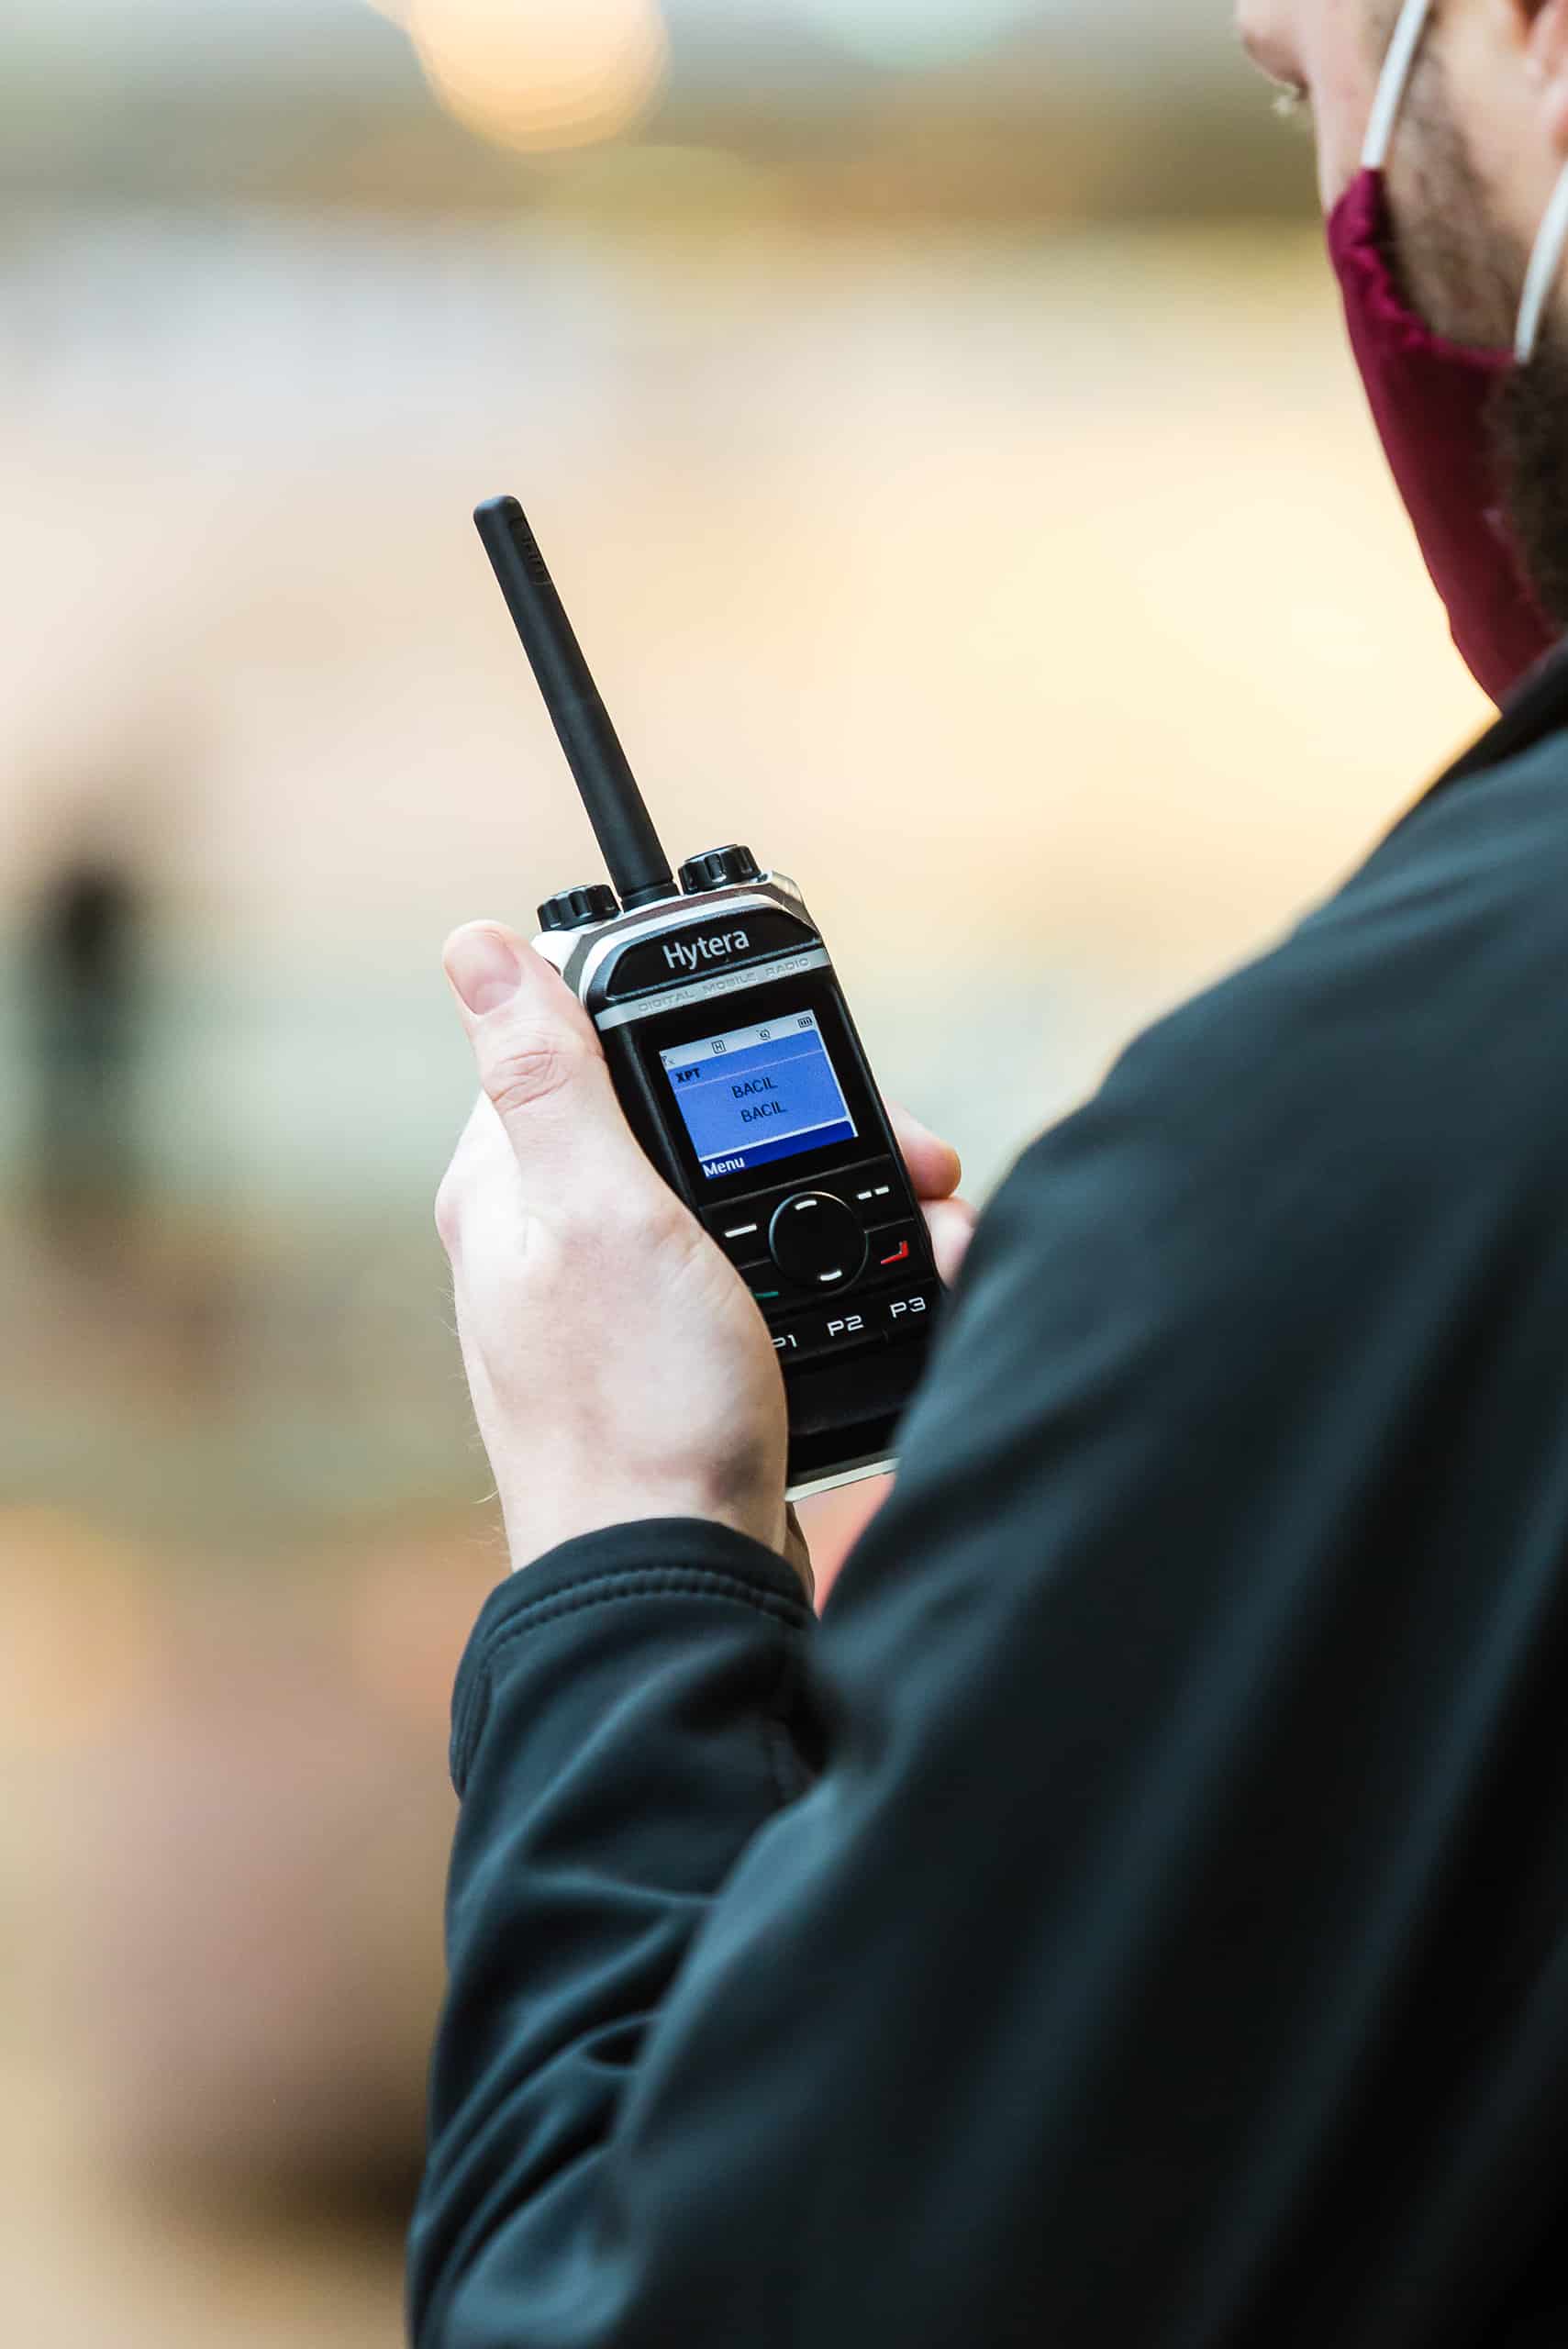 Hytera digital radios are helping Leeds businesses - case study - Radiocoms